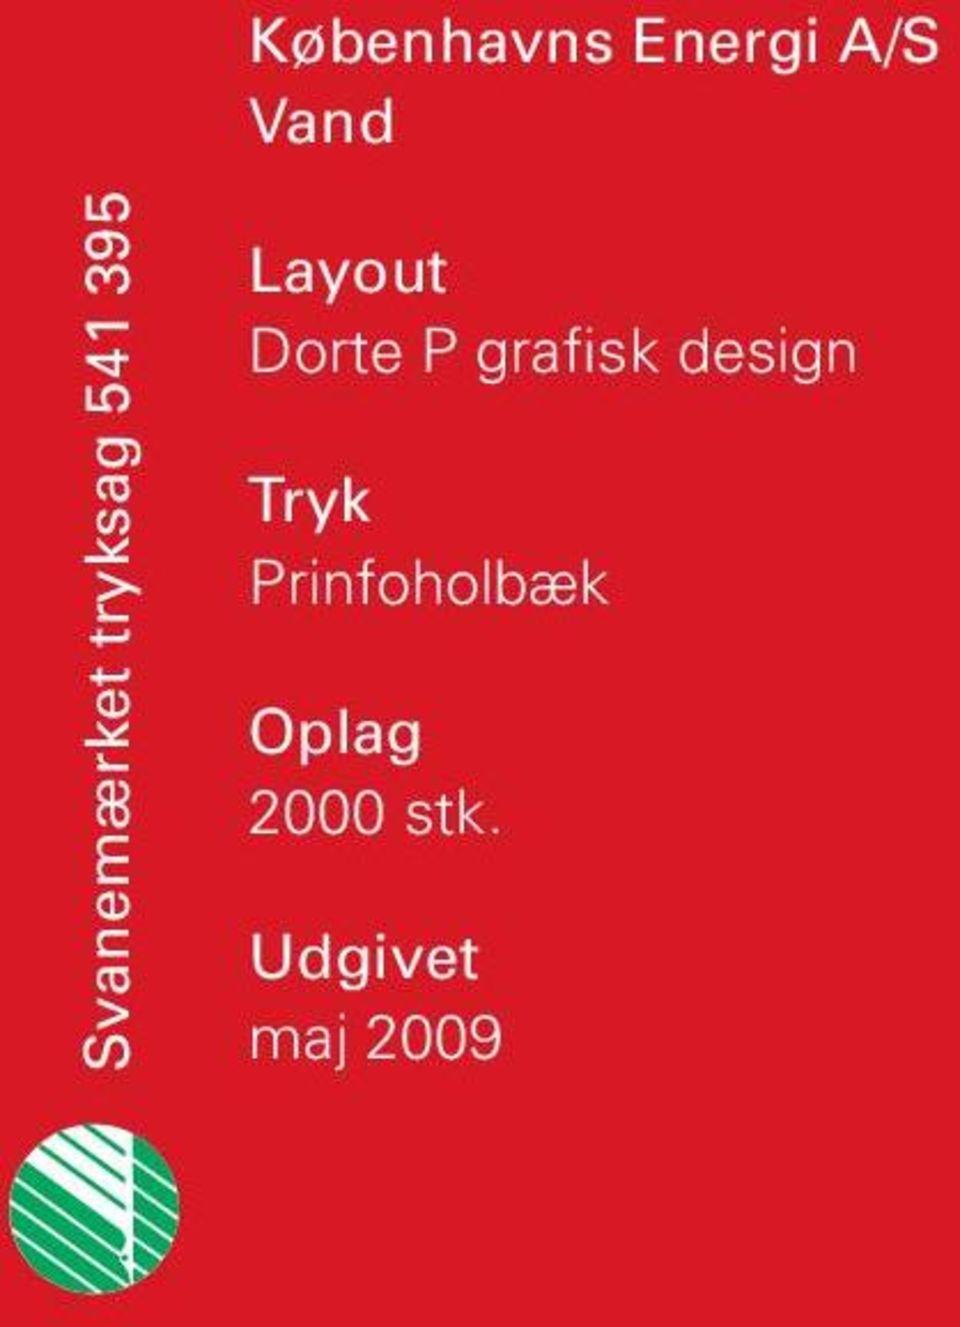 Layout Dorte P grafisk design